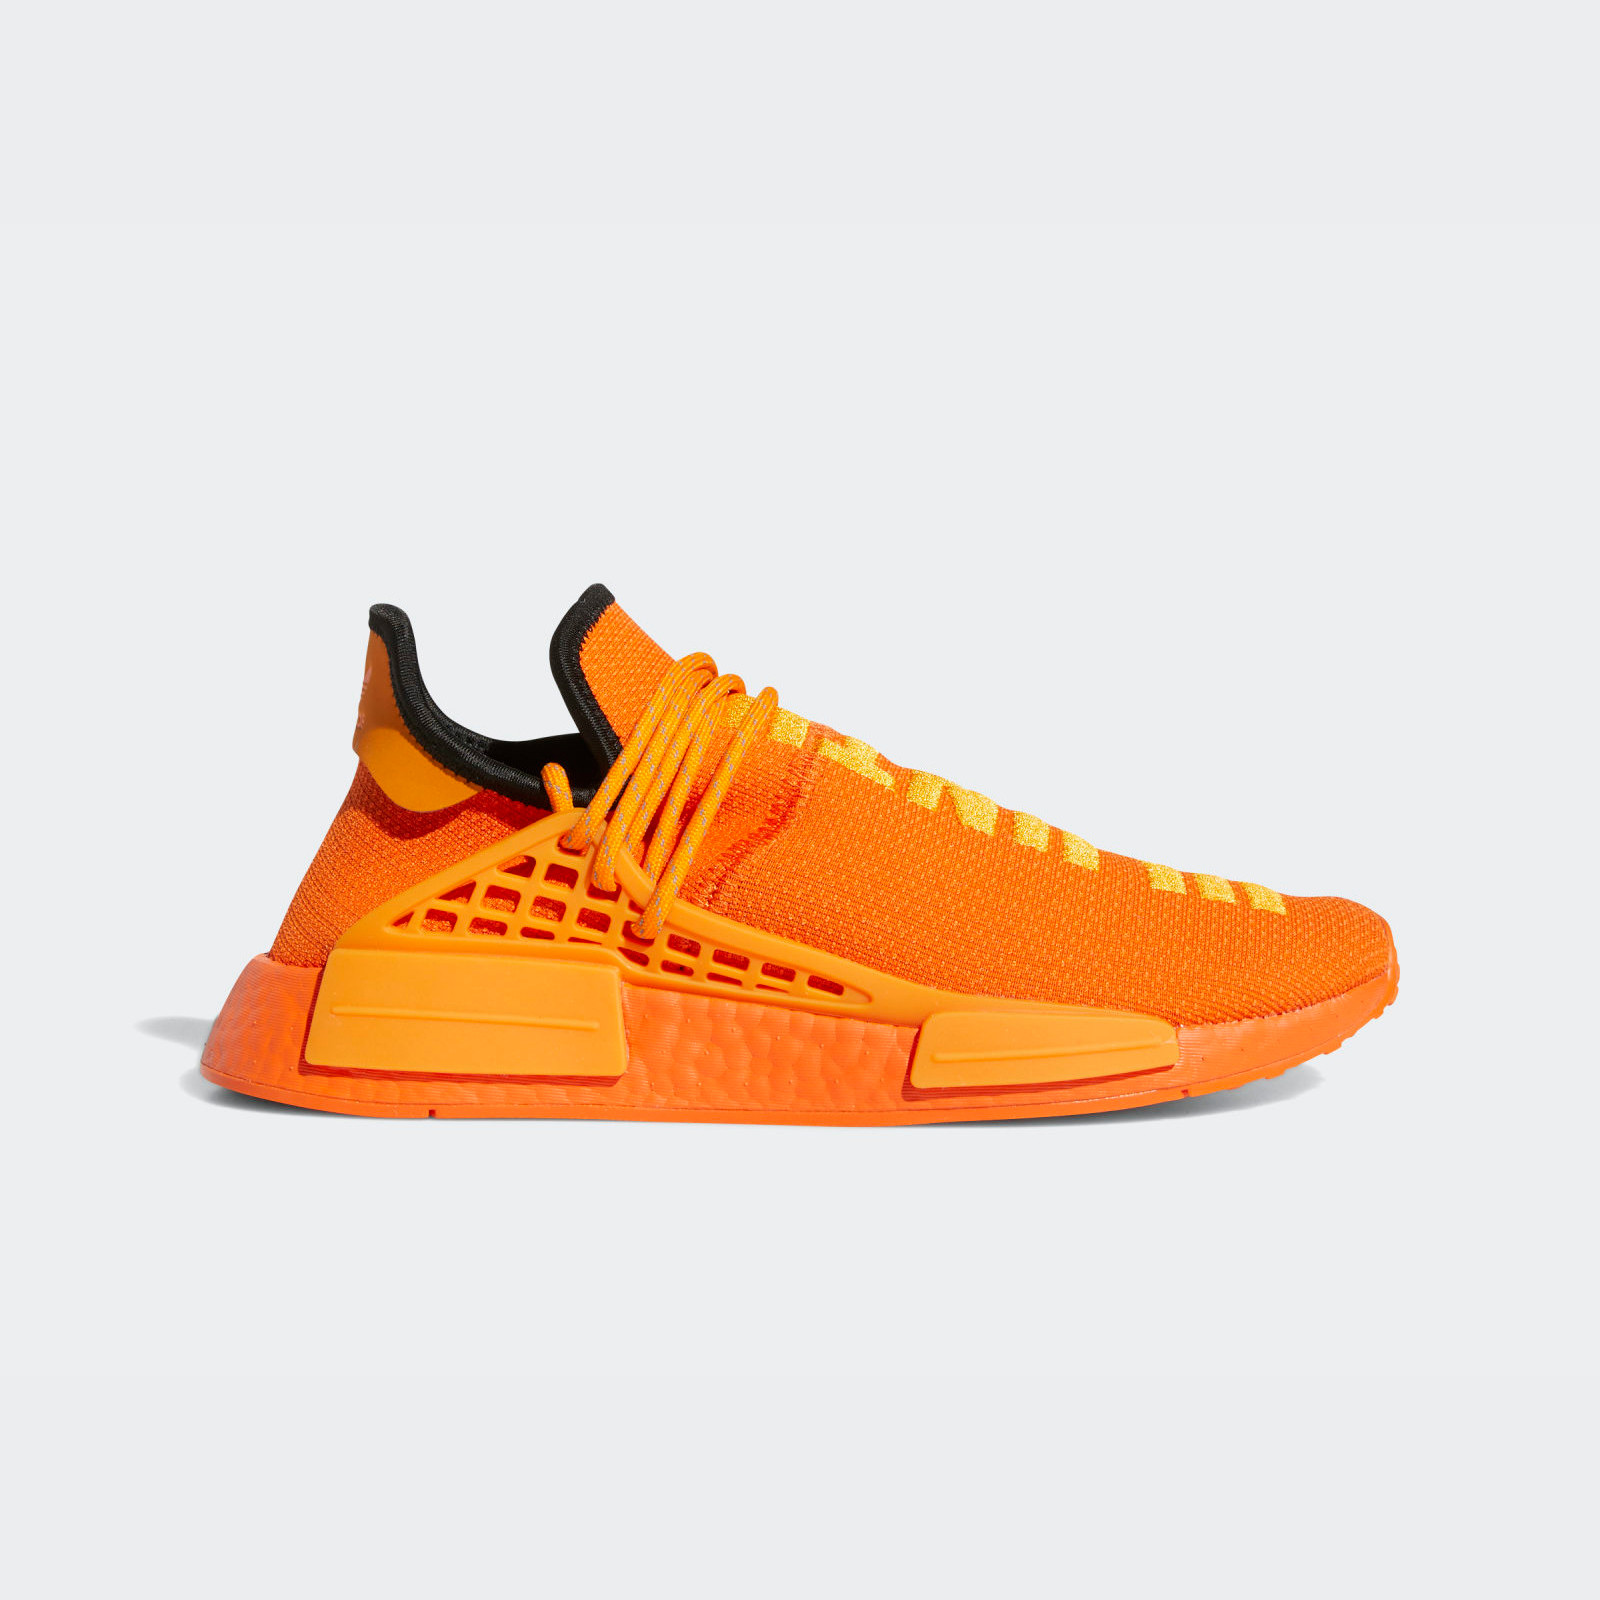 Adidas x Pharrell Williams
NMD HU Orange